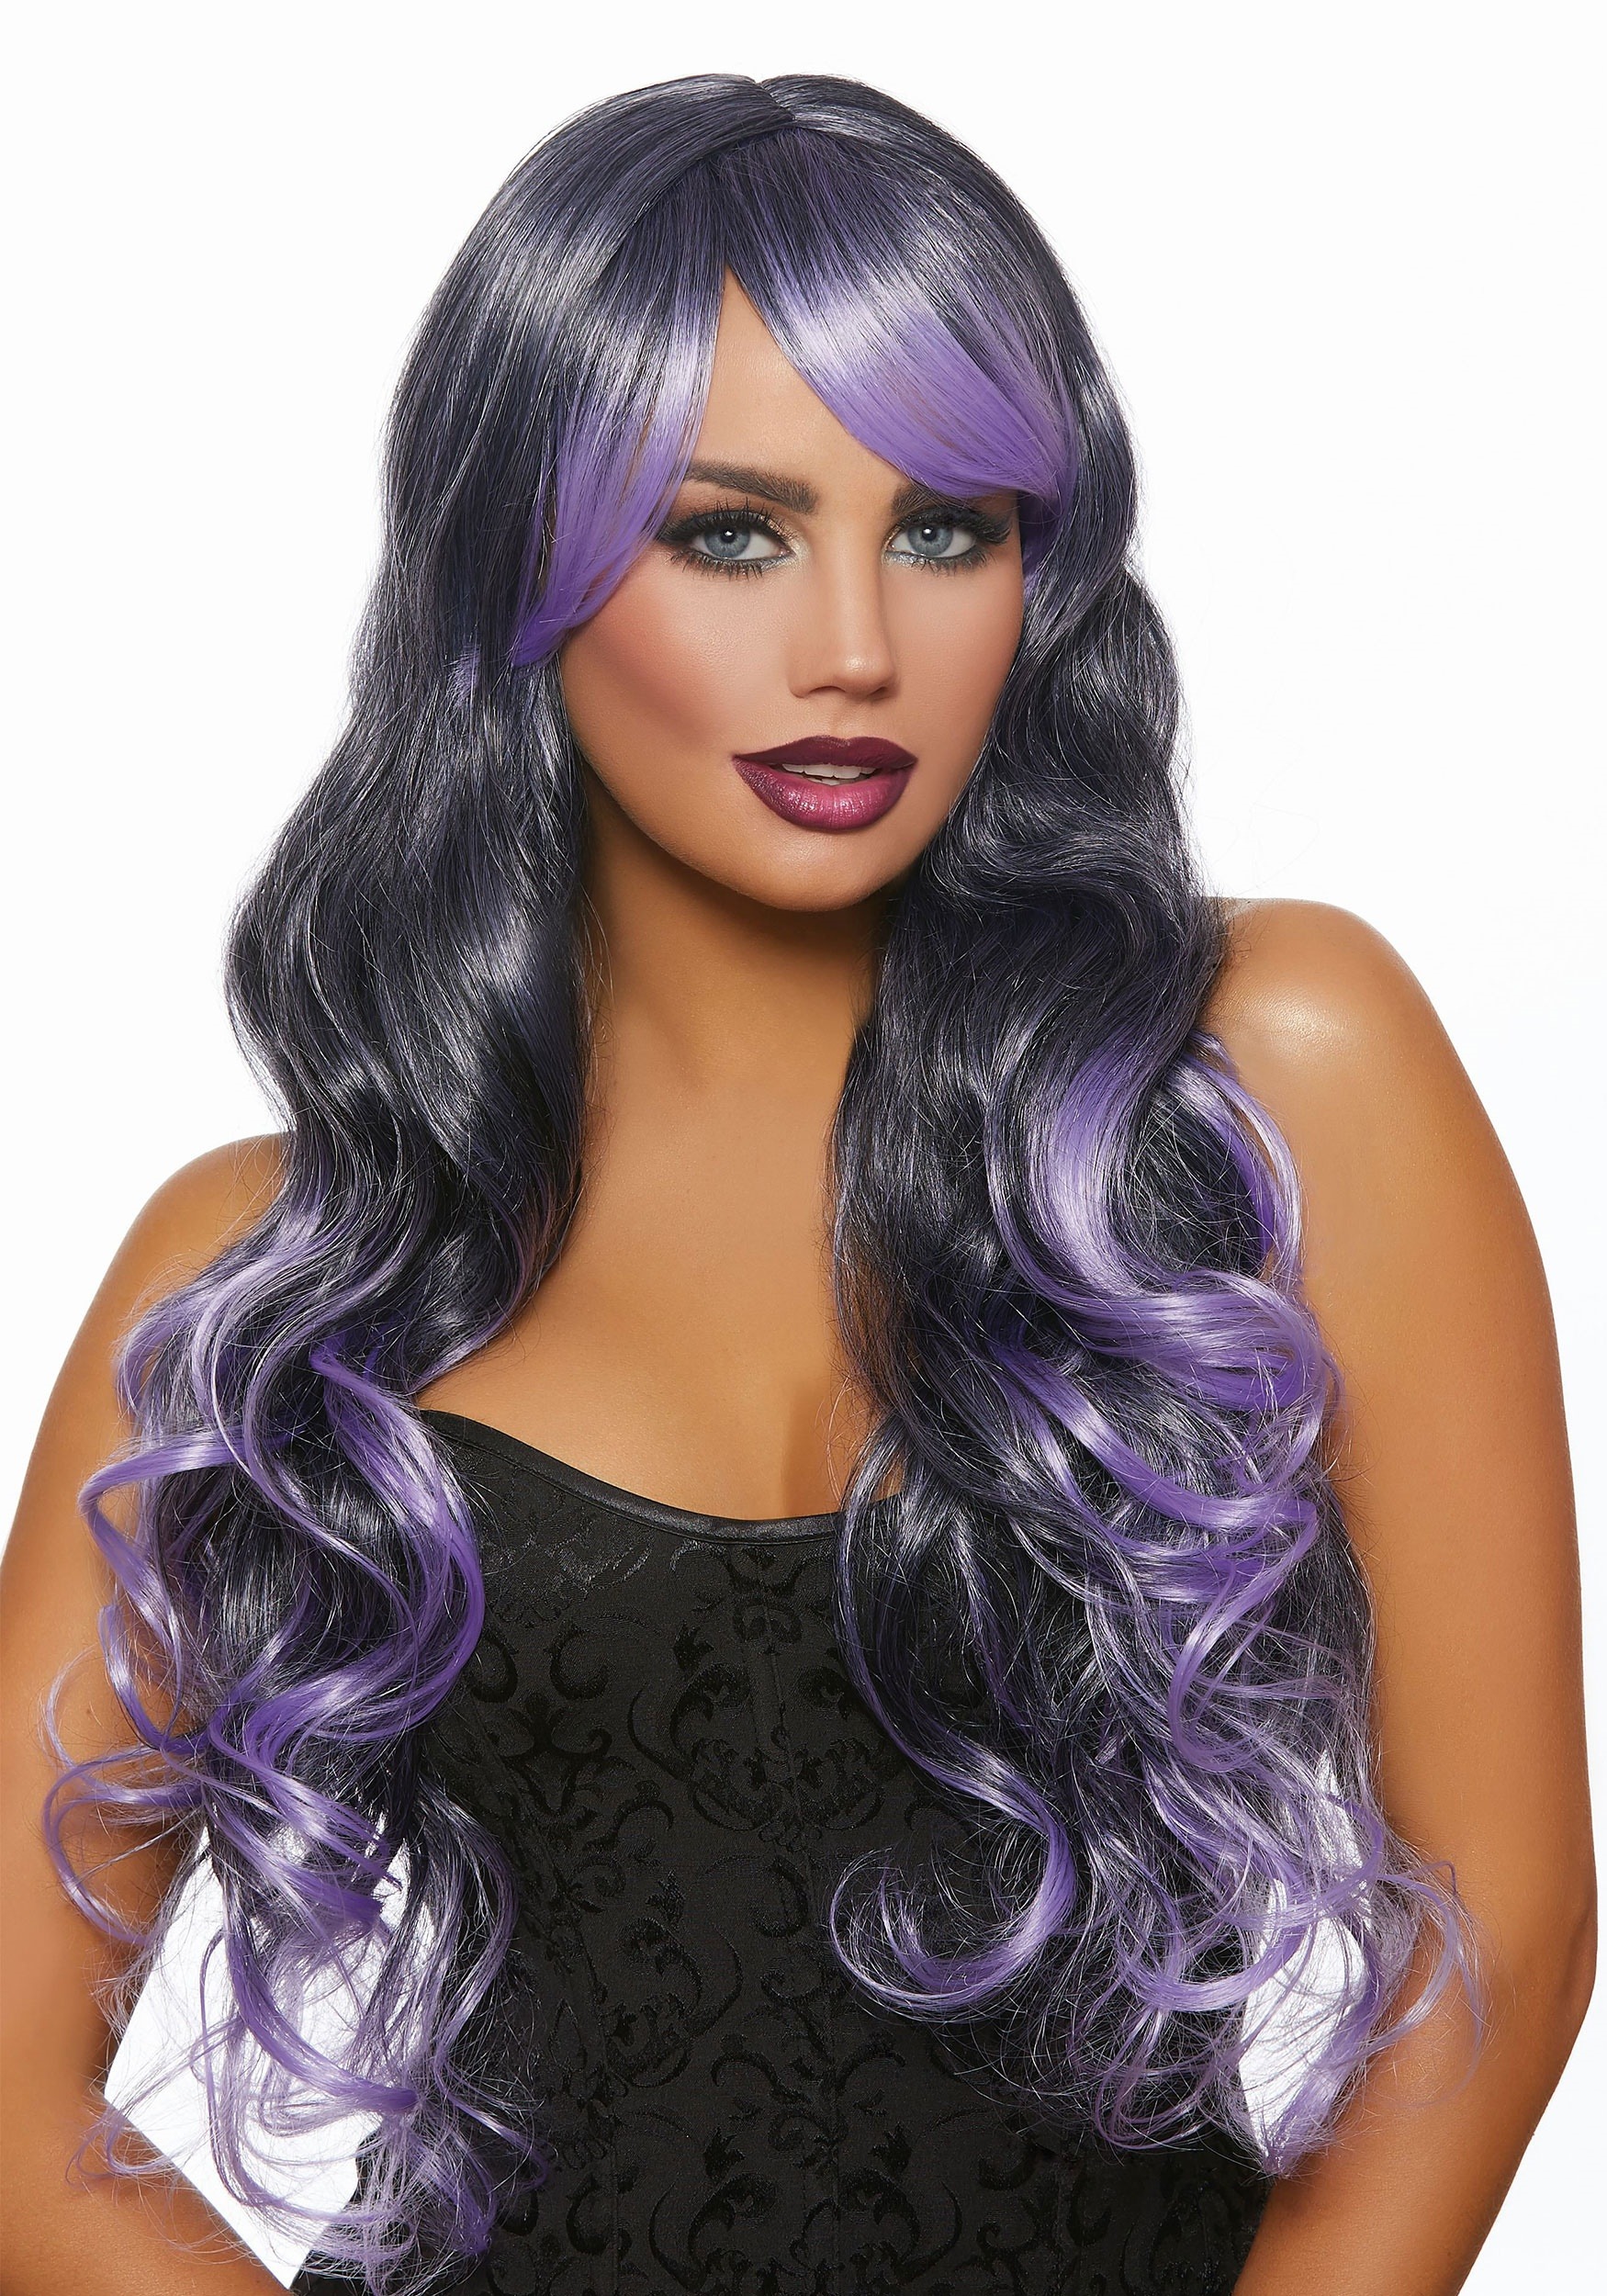 Women's Long Wavy Black/Lavender Ombre Wig